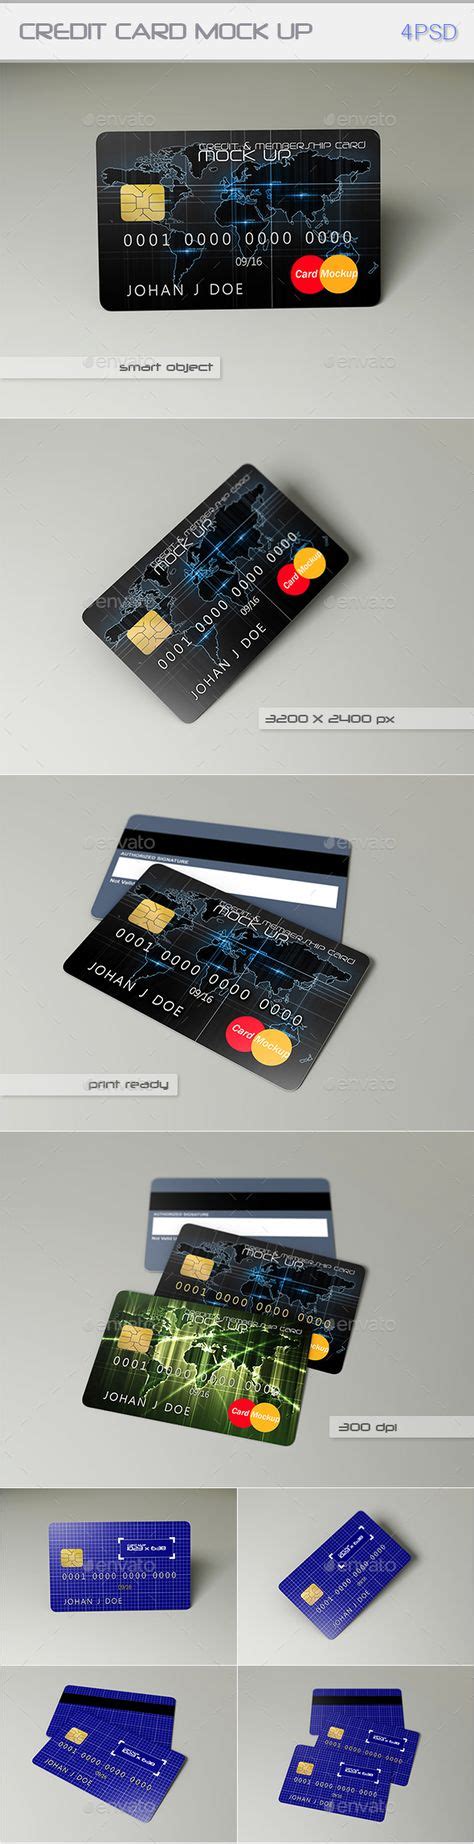 30 Best Creid Card Images Credit Card Design Member Card Cards